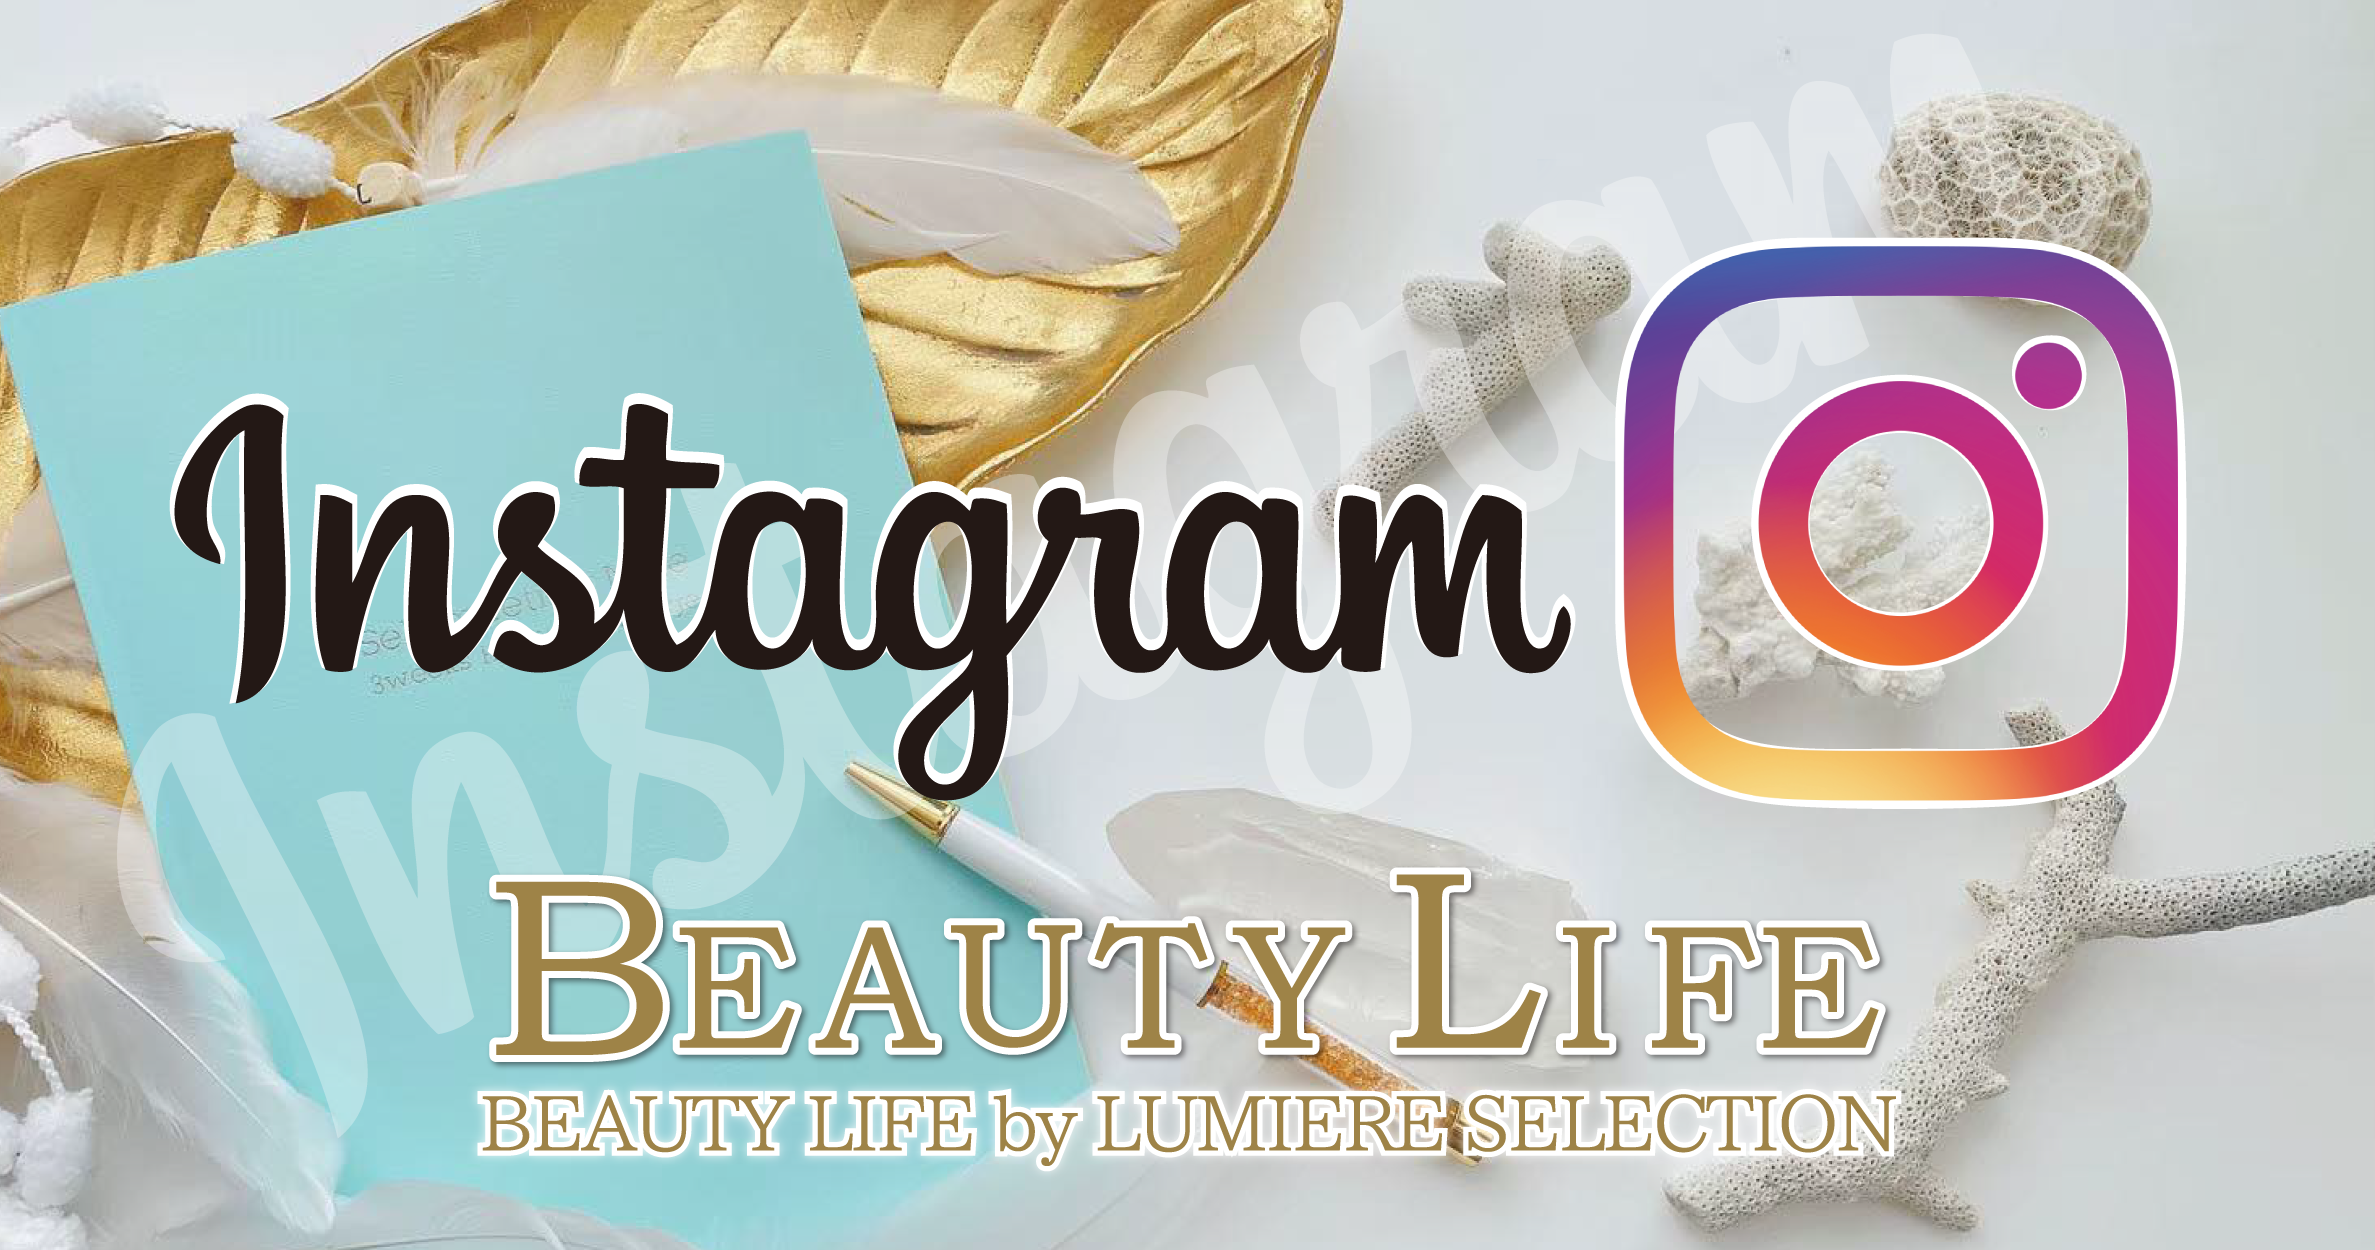 Beauty Life Instagram